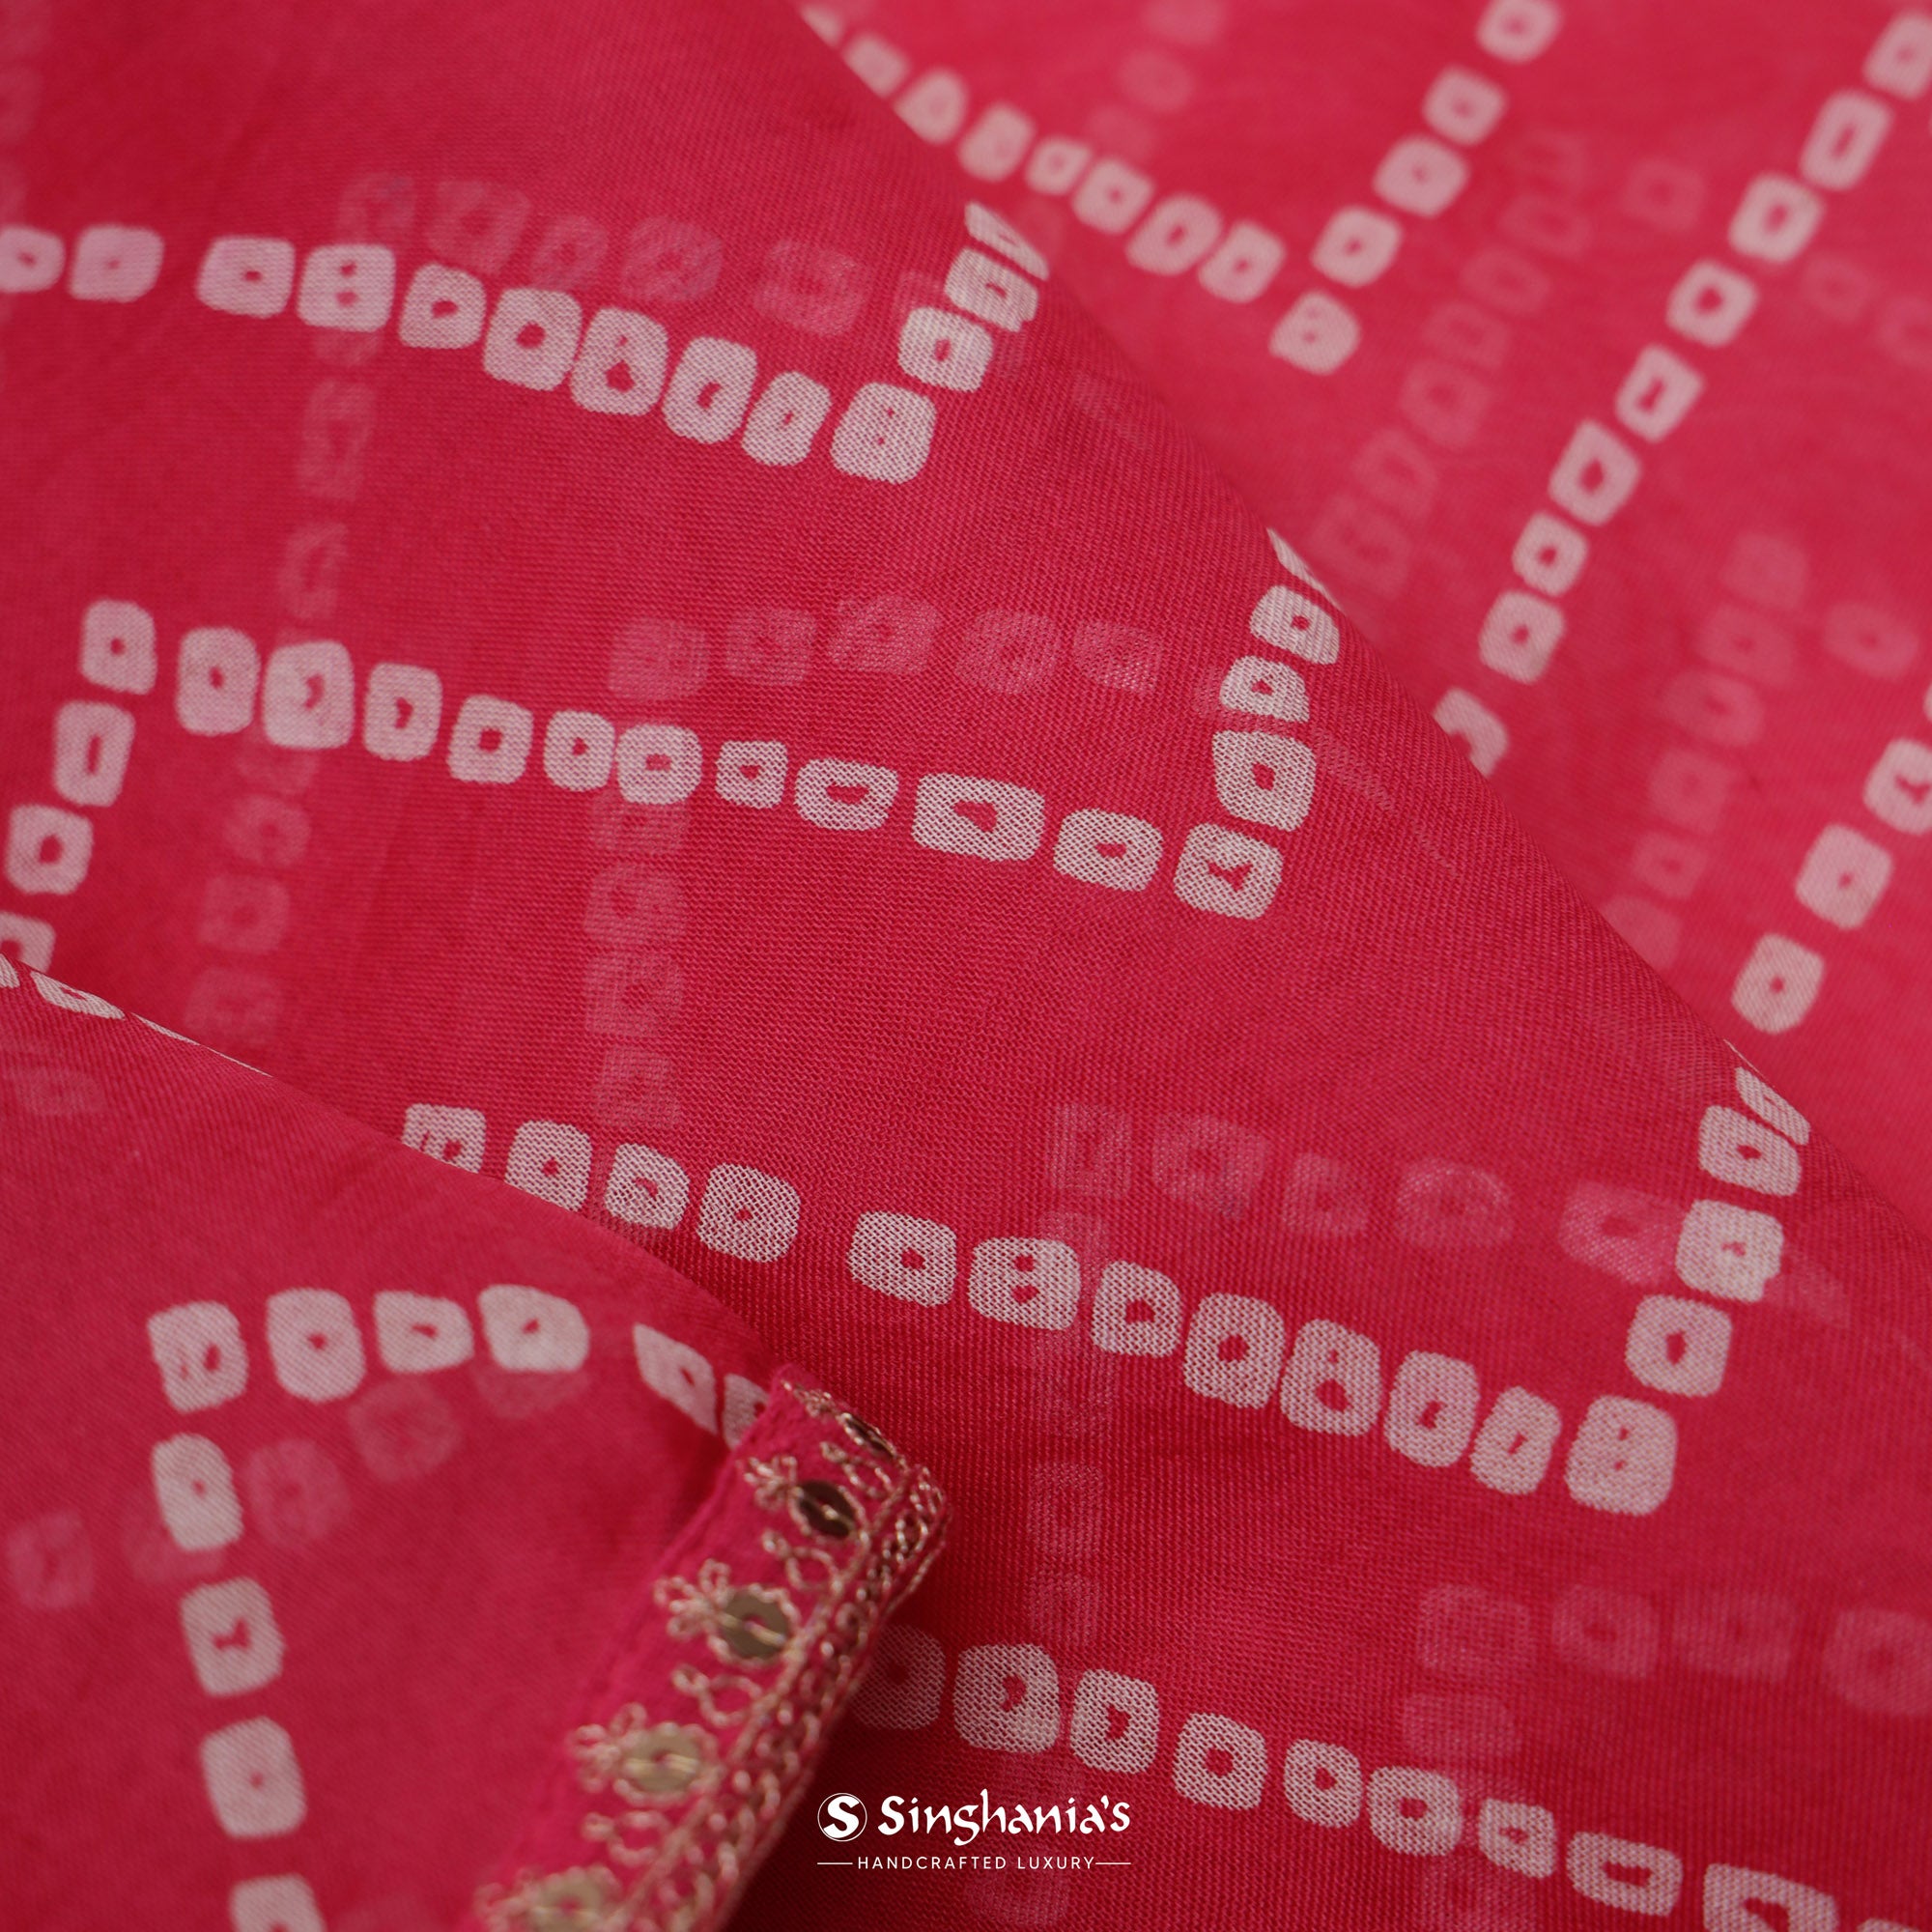 Paradise Pink Printed Organza Saree With Bandhani Pattern